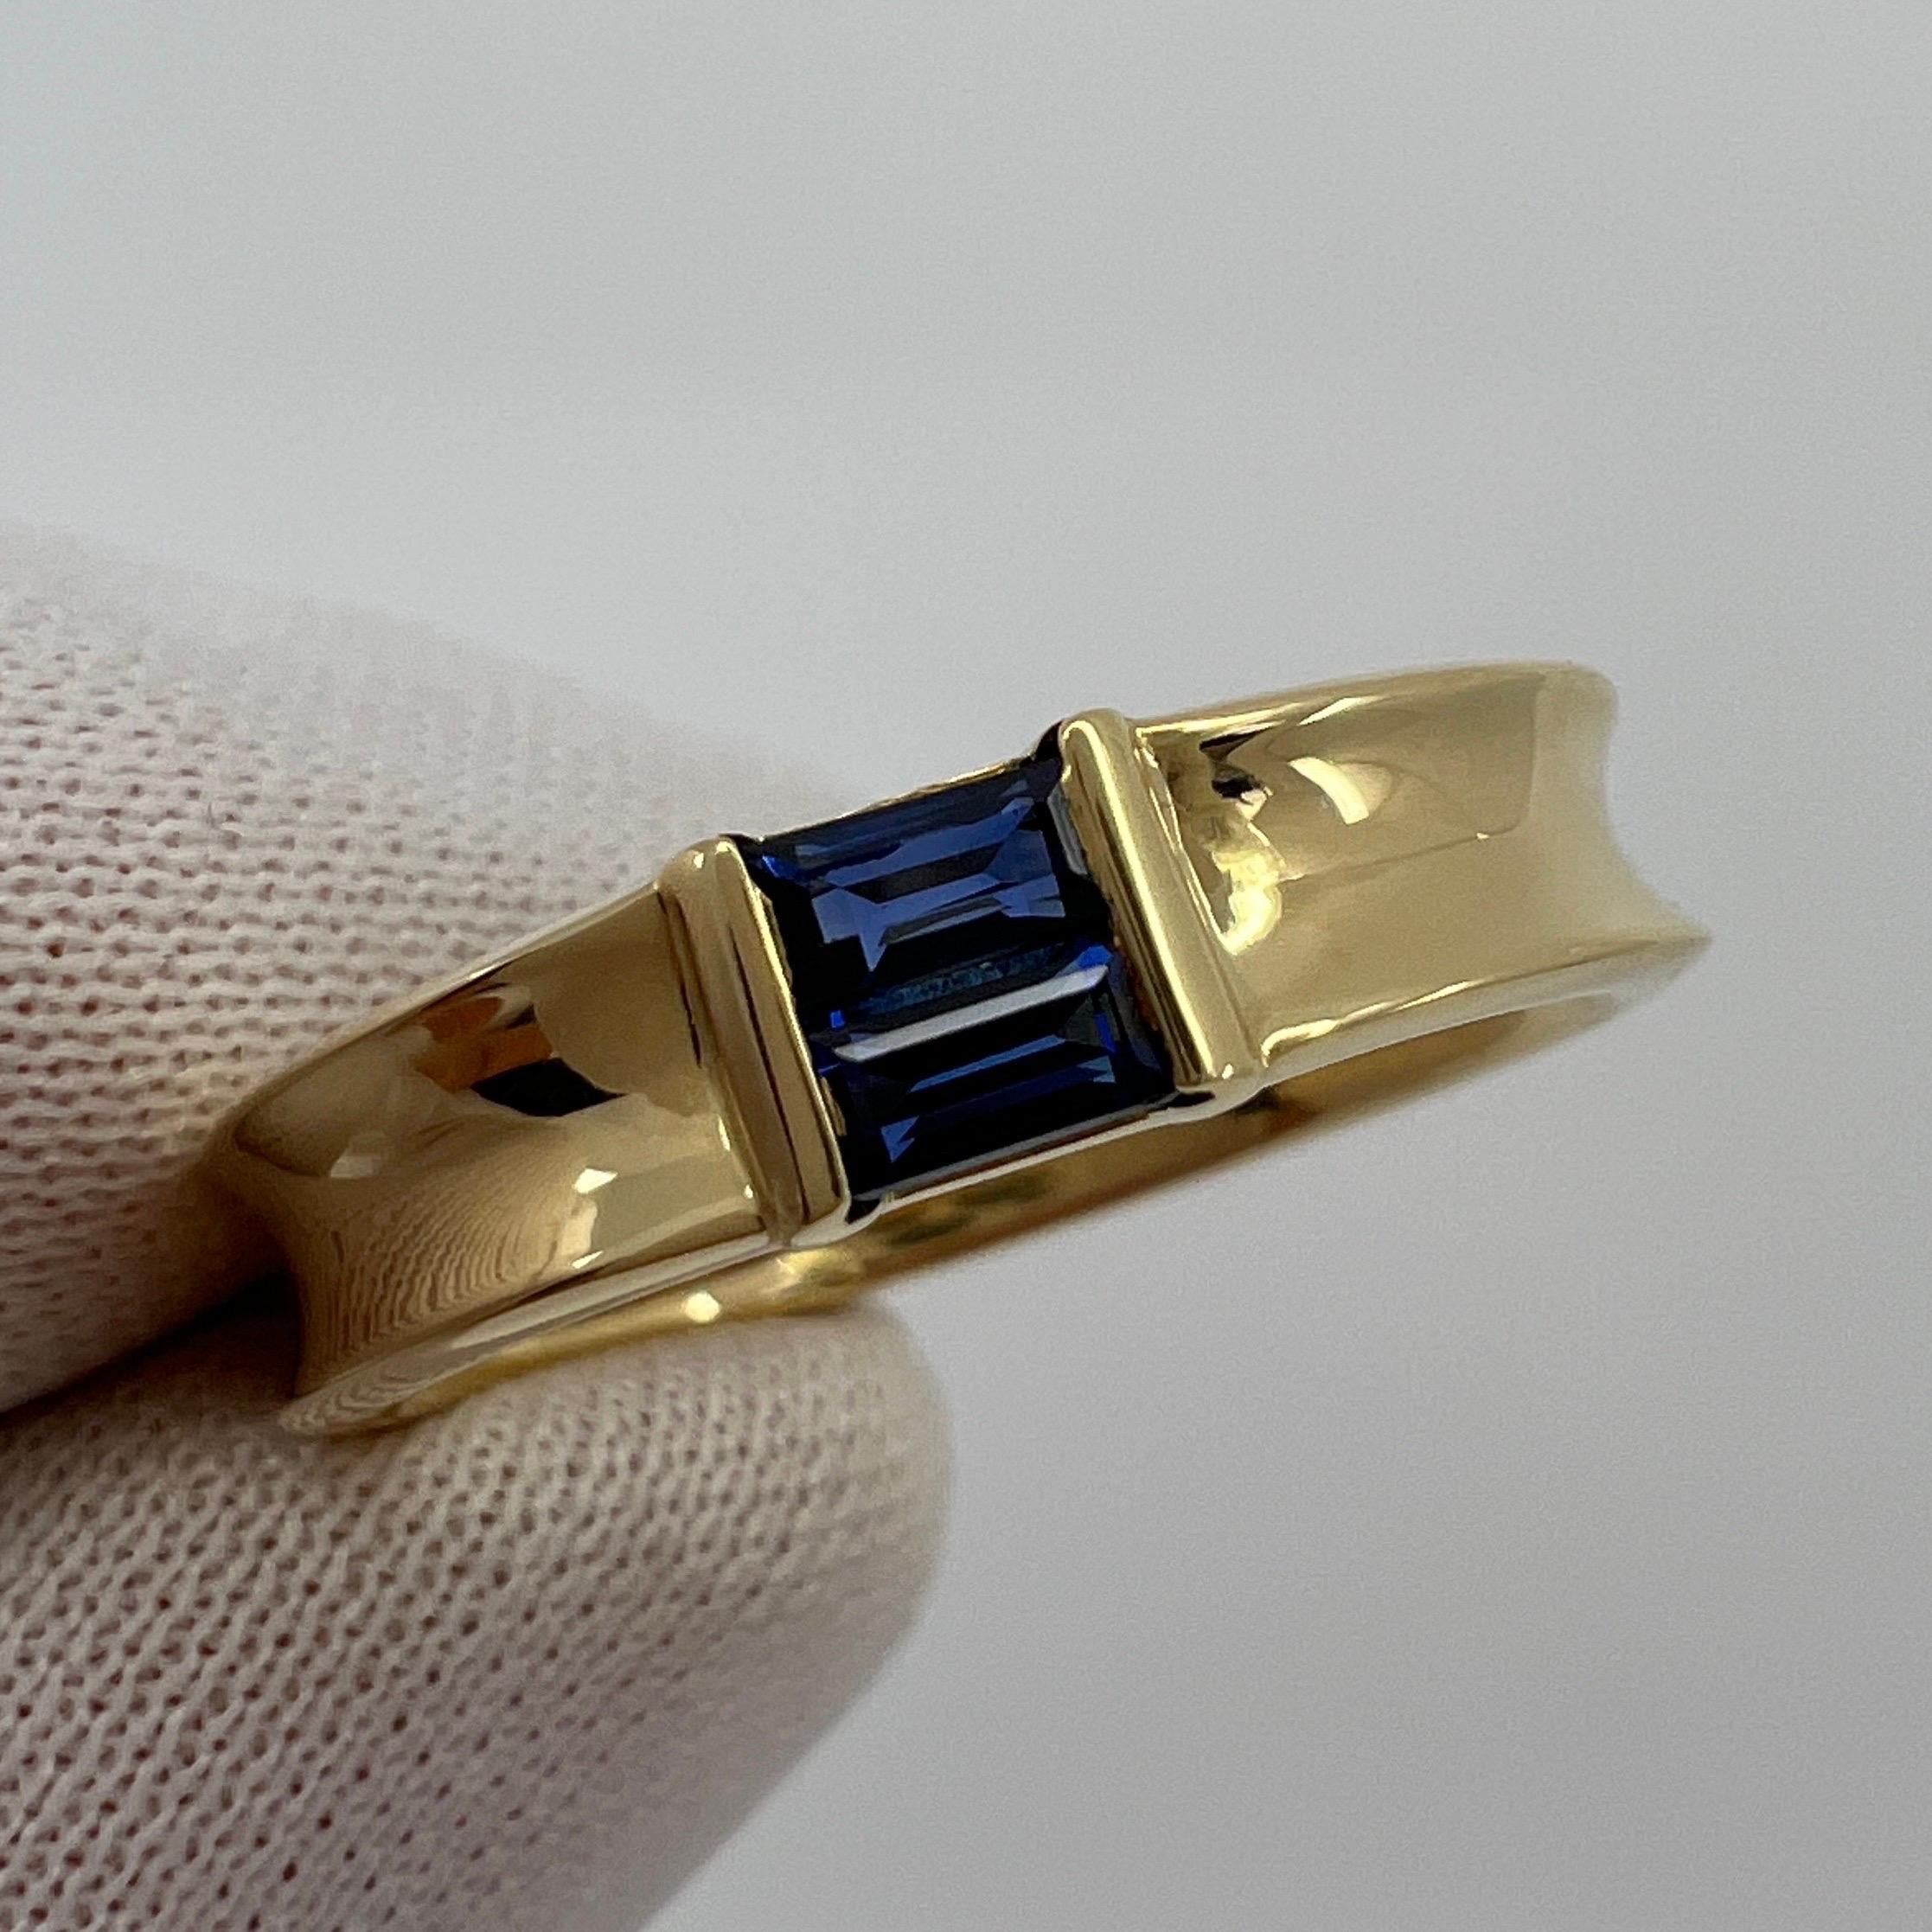 yellow sapphire ring tiffany